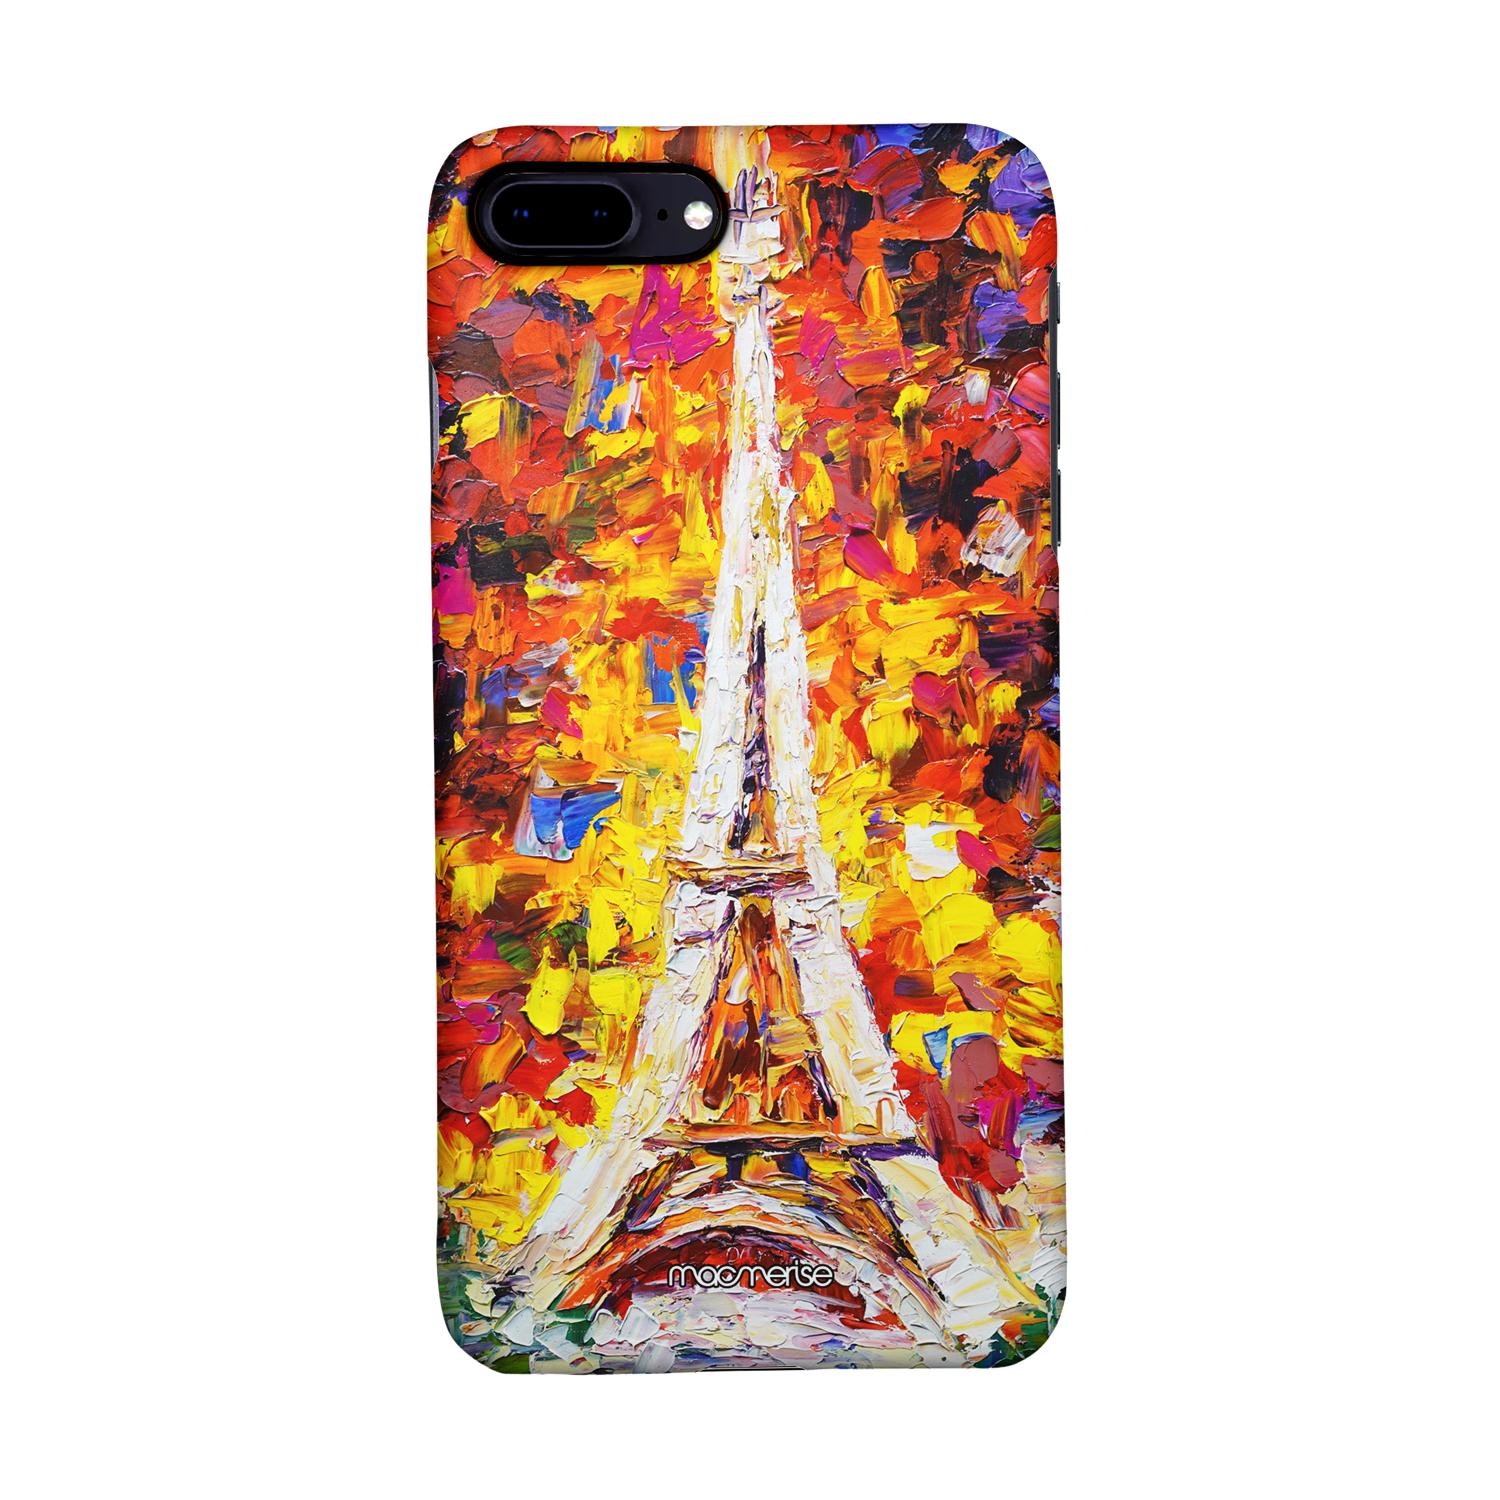 Buy Artistic Eifel - Sleek Phone Case for iPhone 8 Plus Online